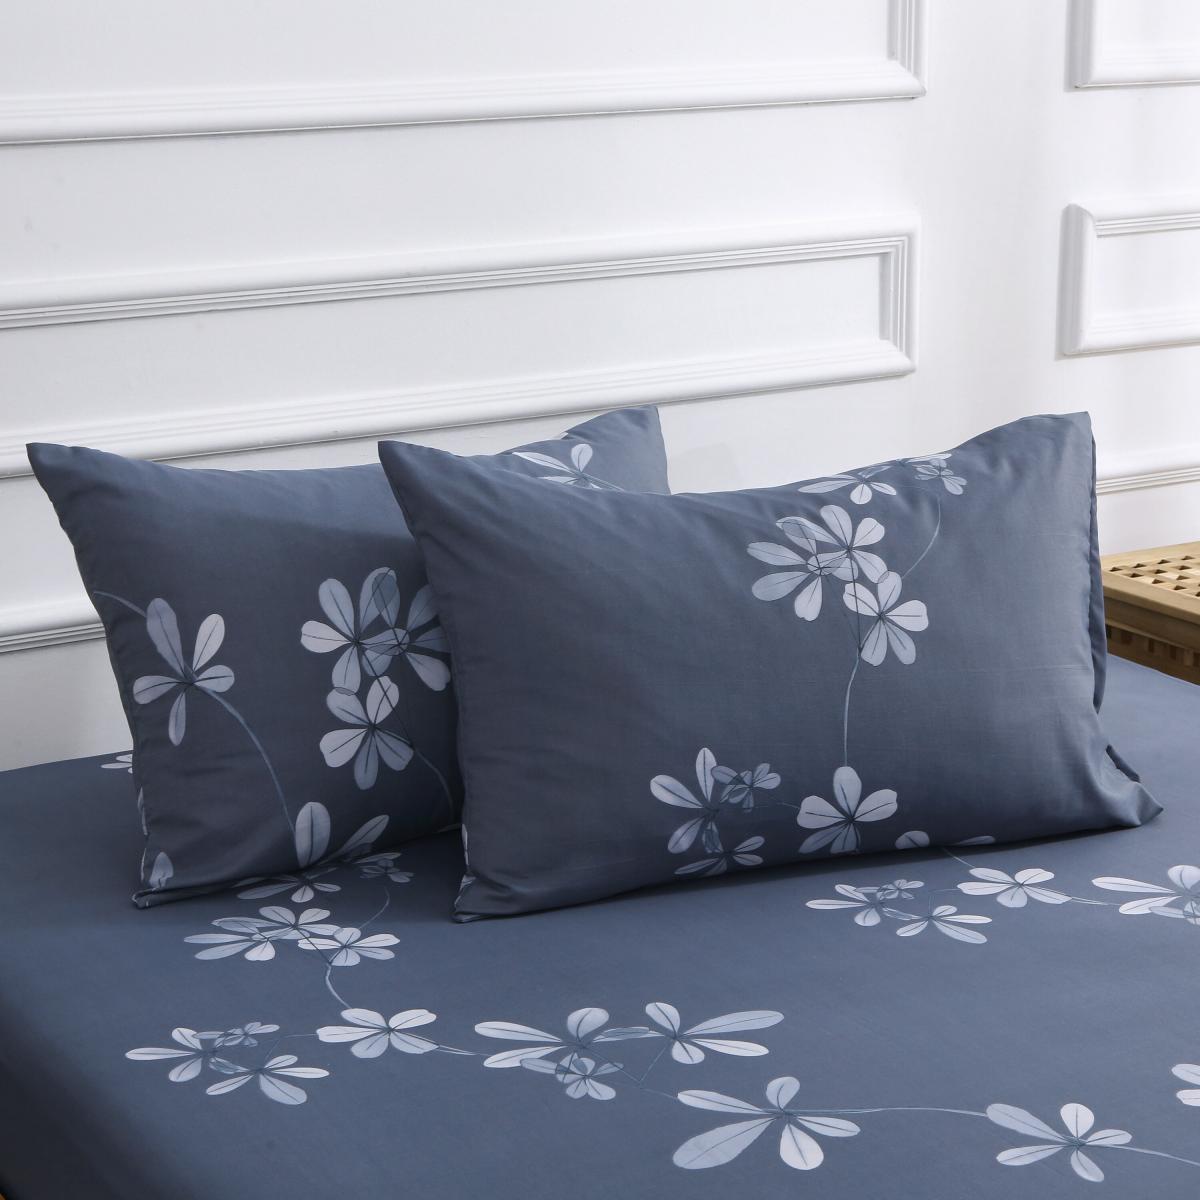 Buy Premium Bedding Sets (Fitted Sheet + Duvet Cover + Pillowcases)